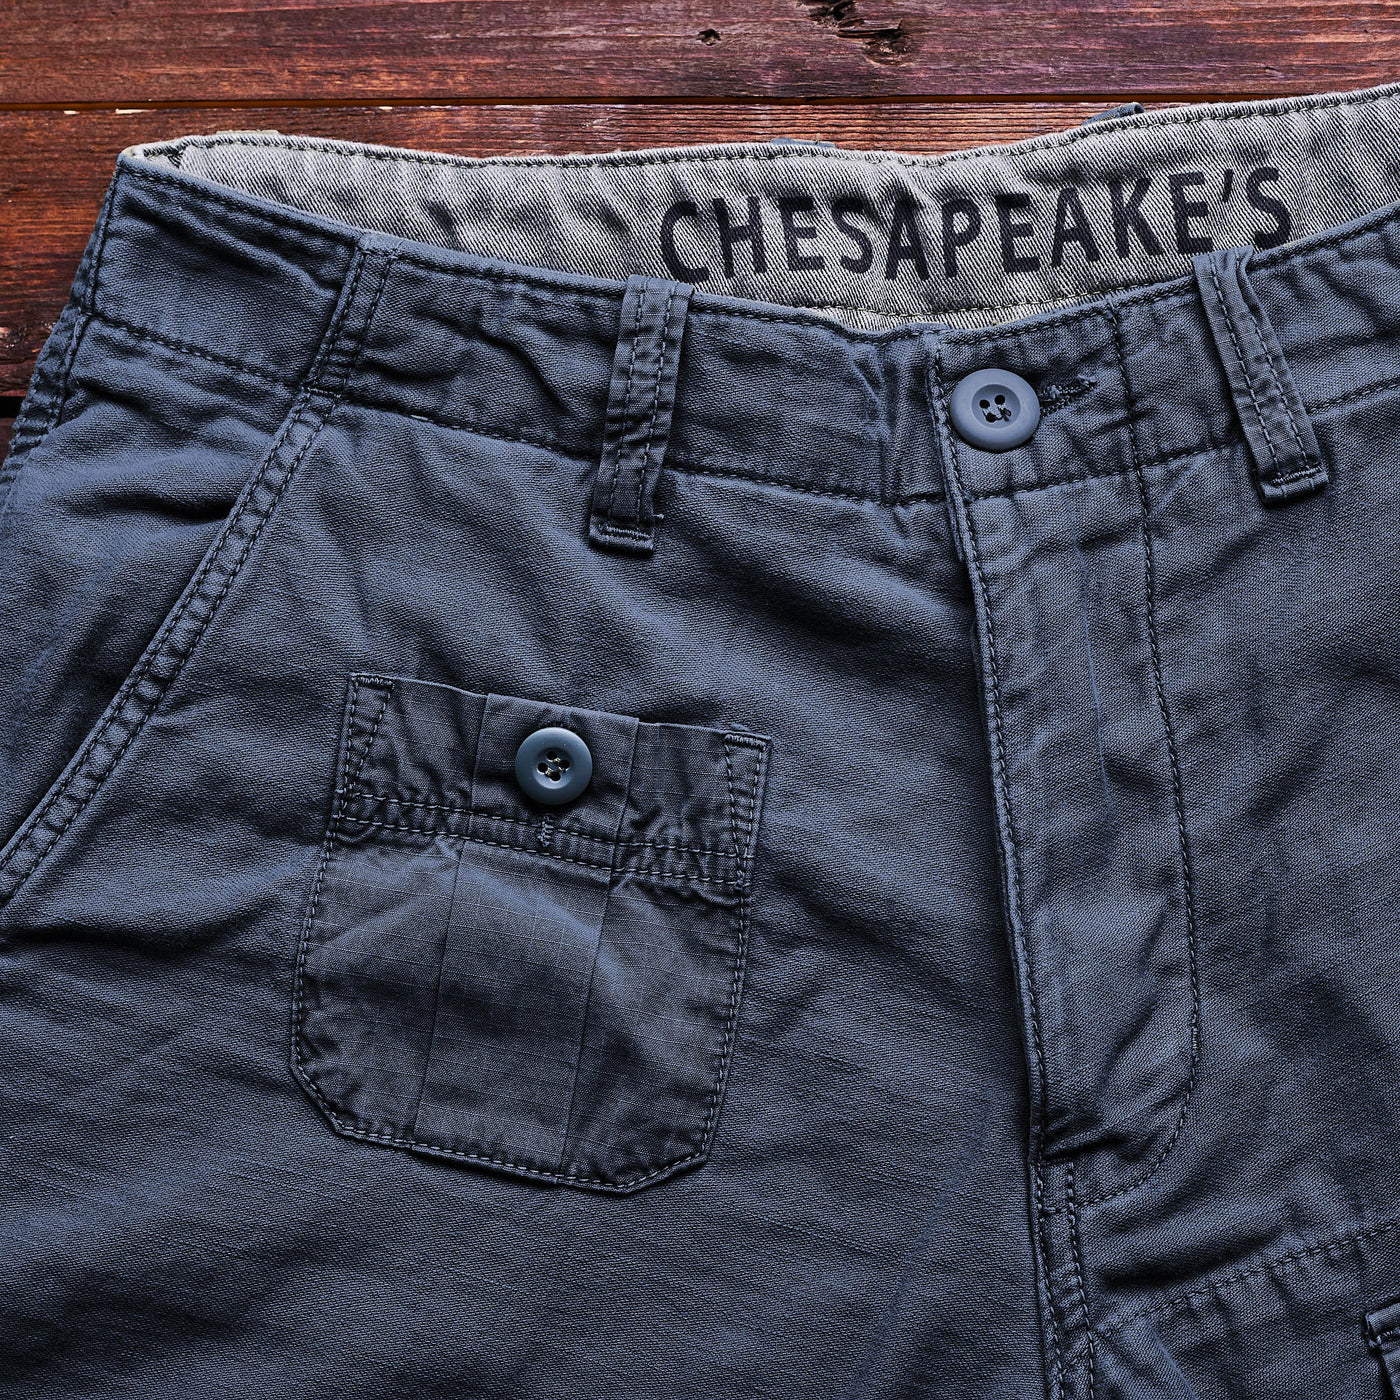 CHESAPEAKE'S - Harbor Shorts - NAVY